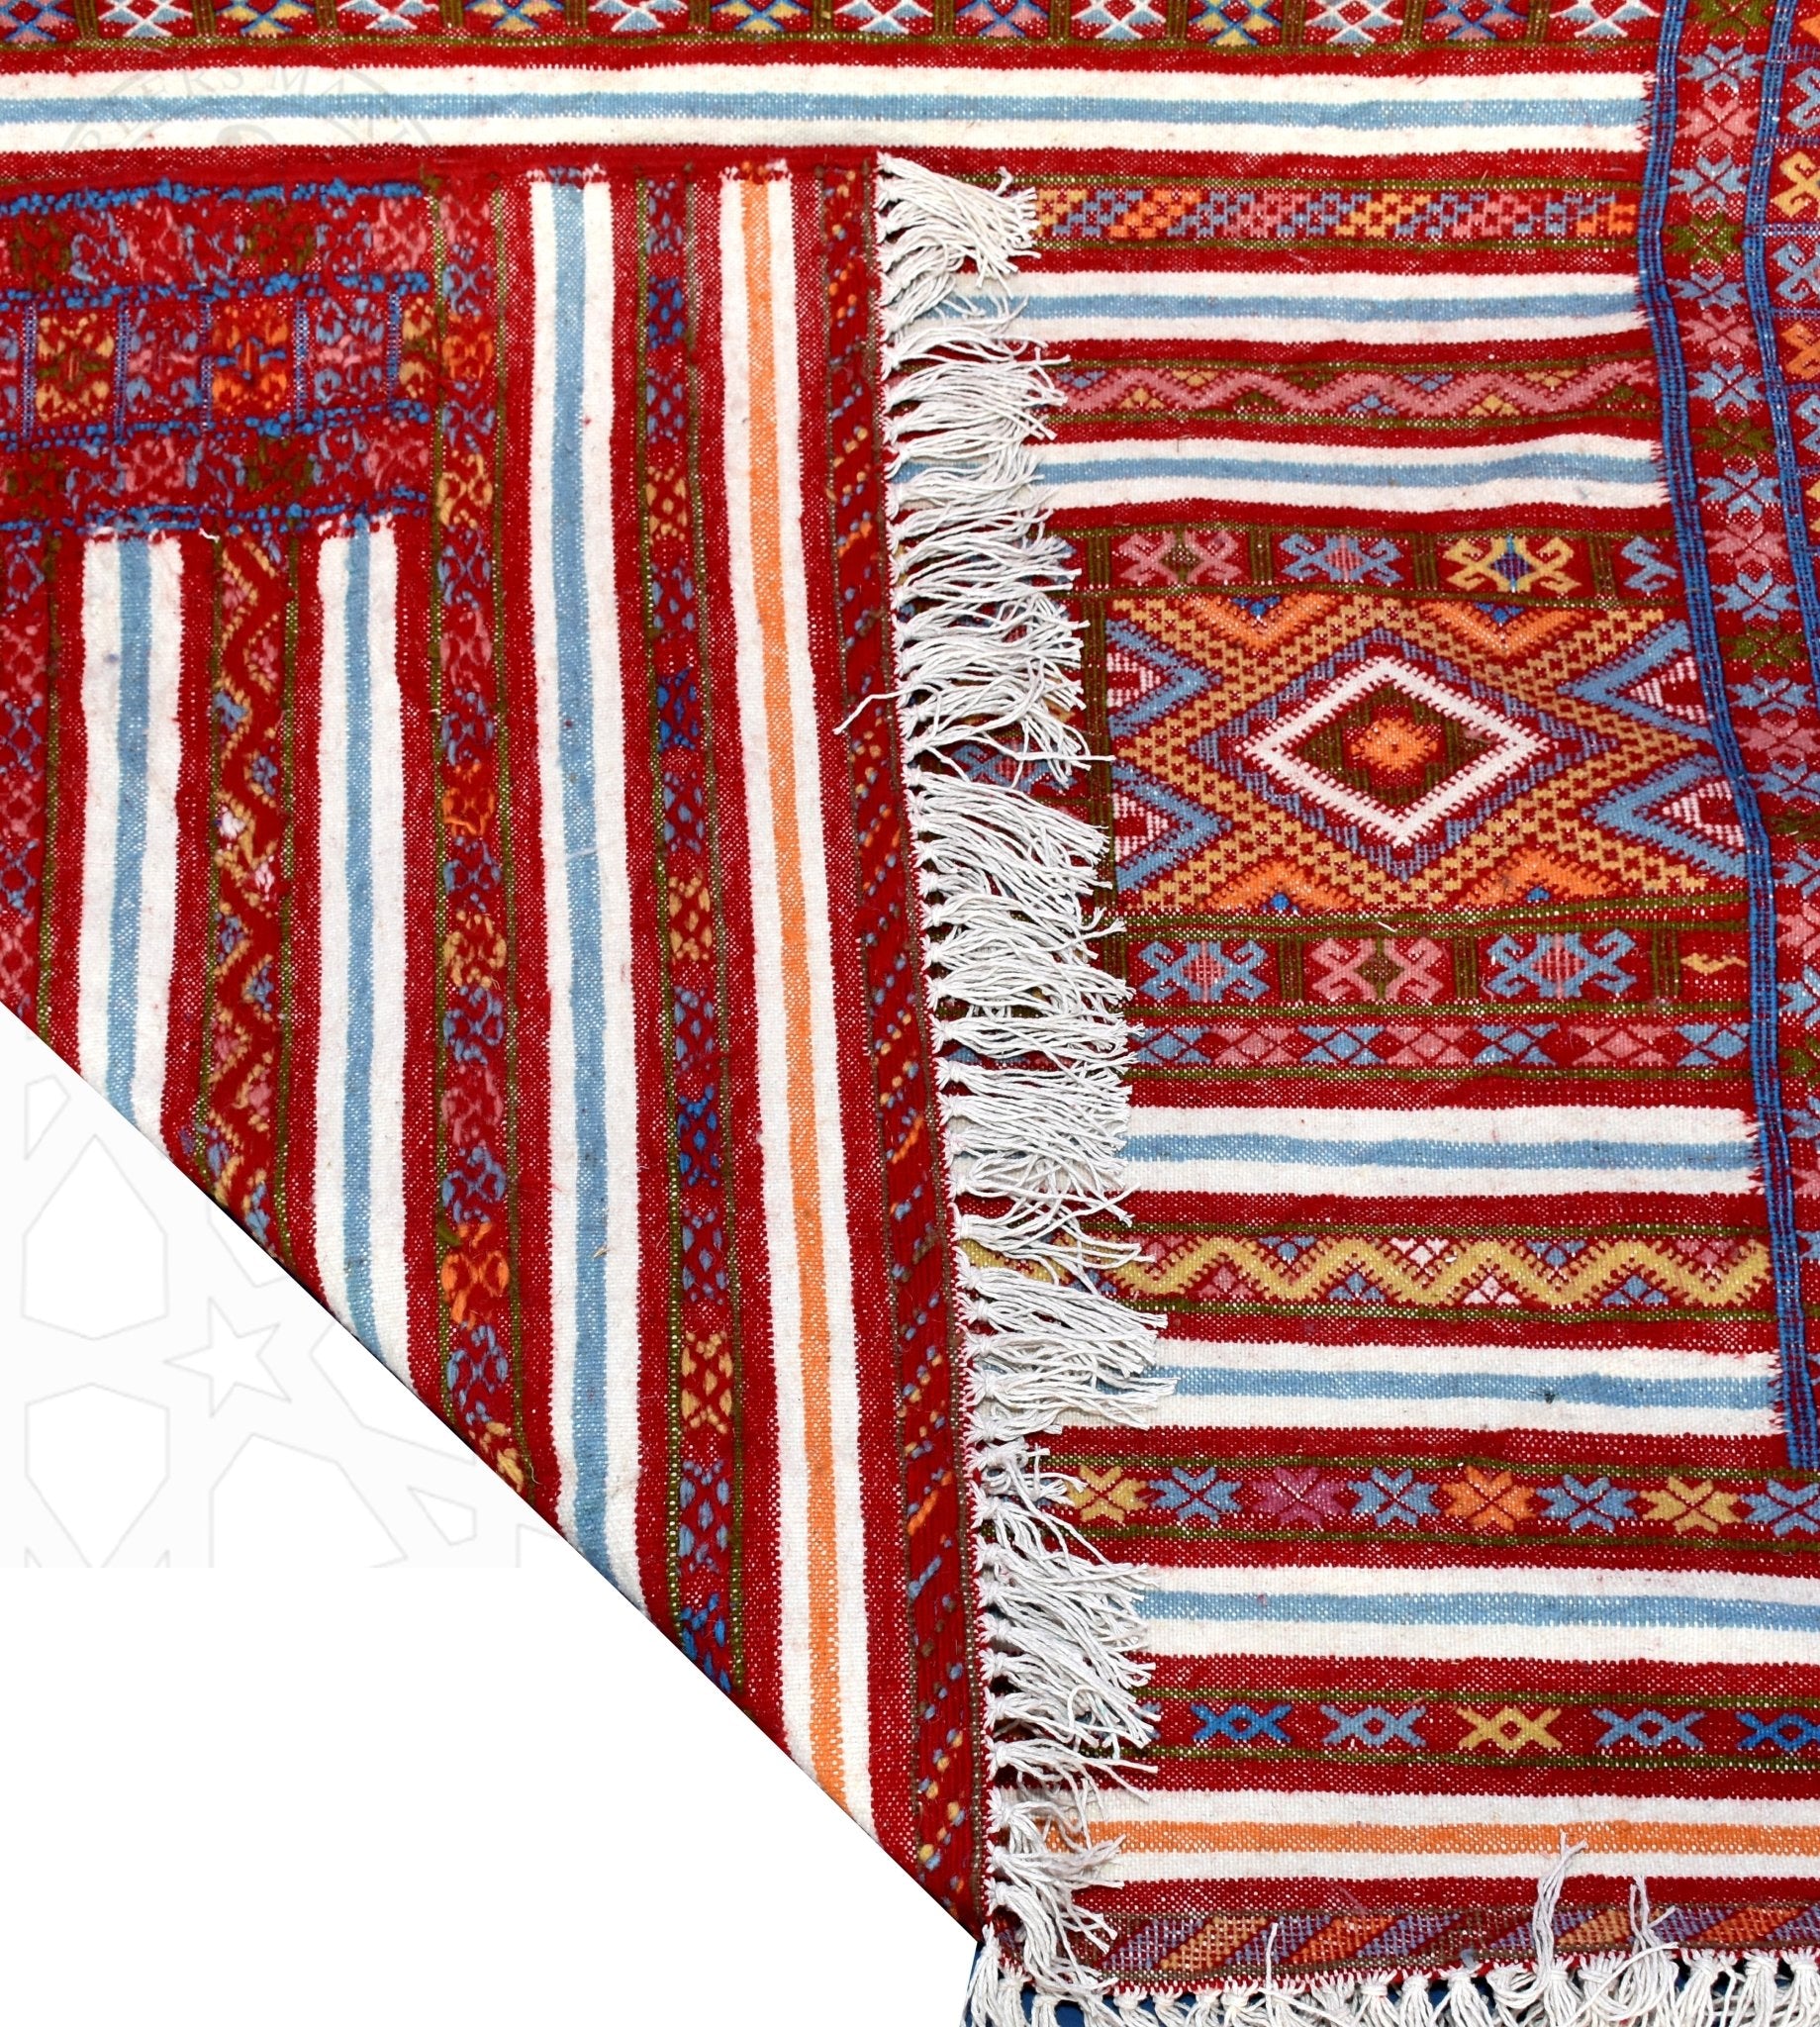 Flatweave kilim hanbal Moroccan rug - 4.93 x 7.06 ft / 150 x 215 cm - Berbers Market